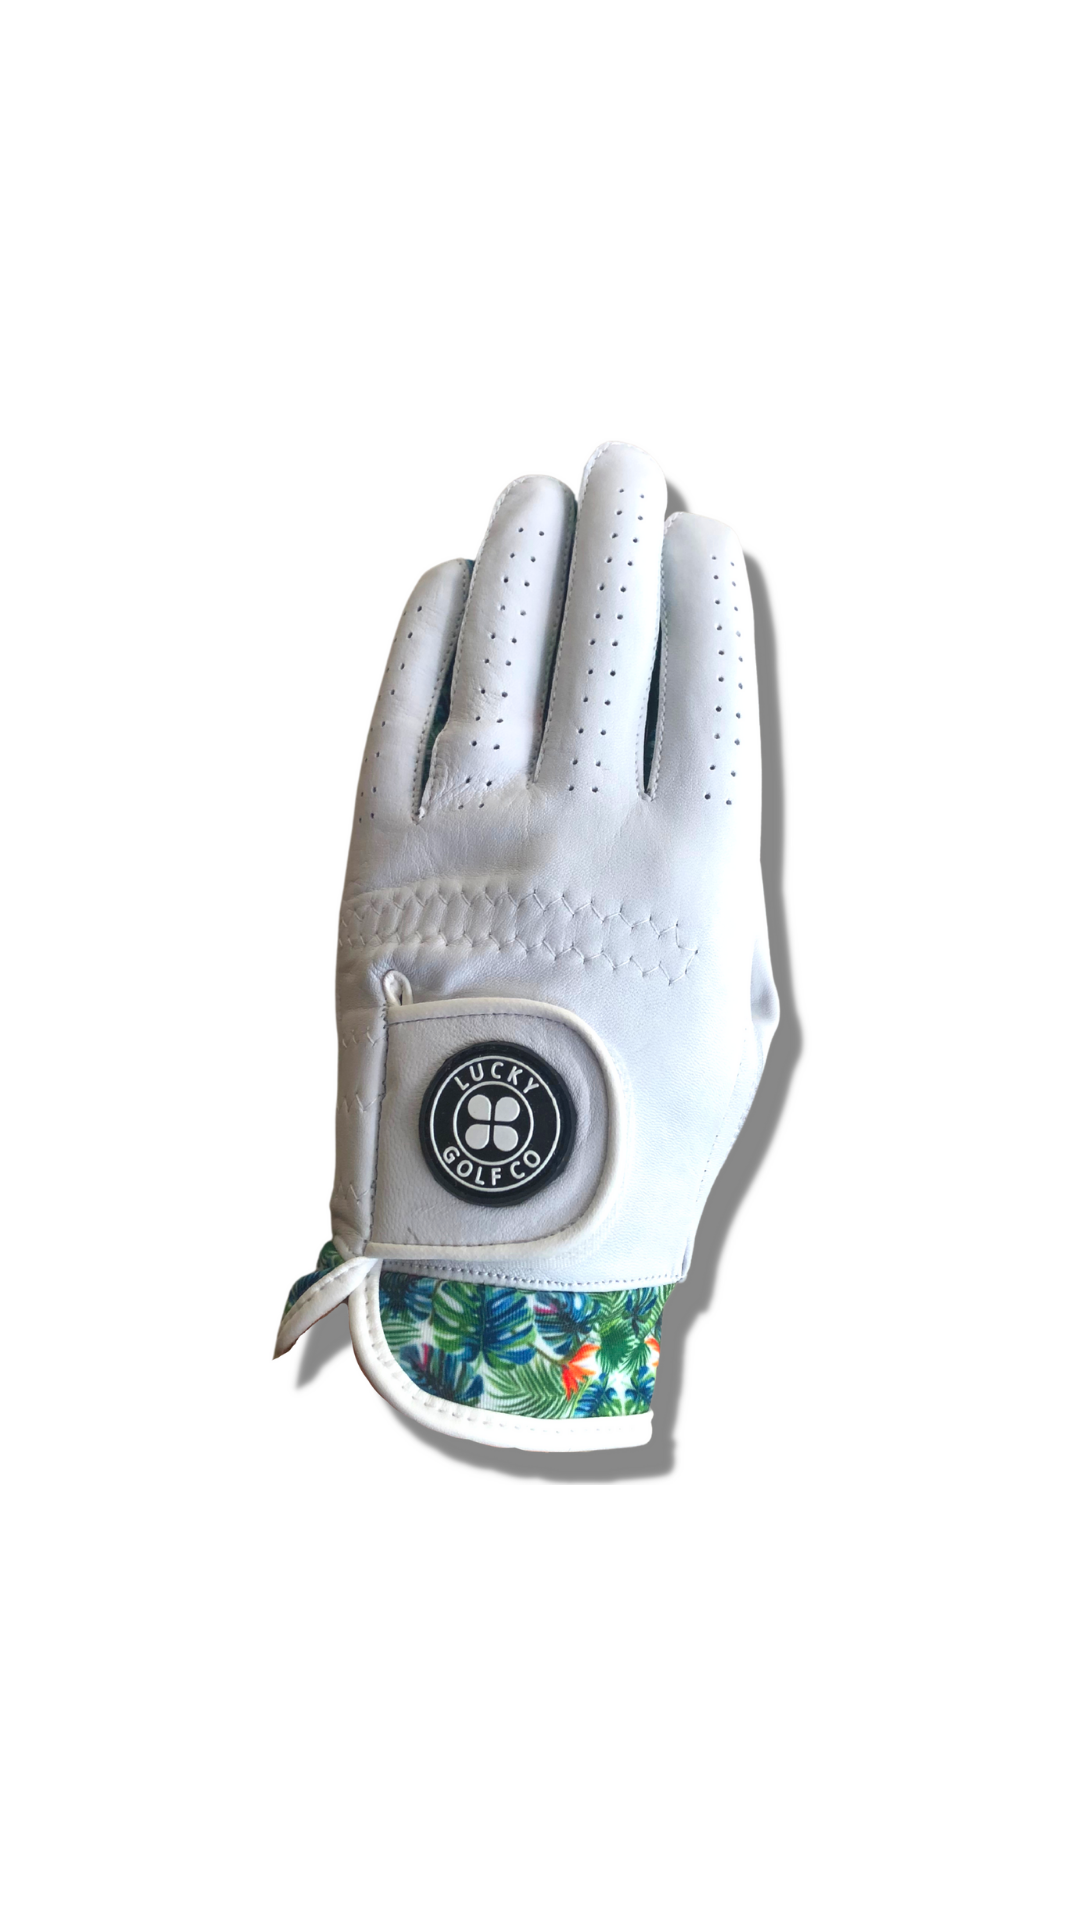 Lucky Tropical Leather Golf Glove